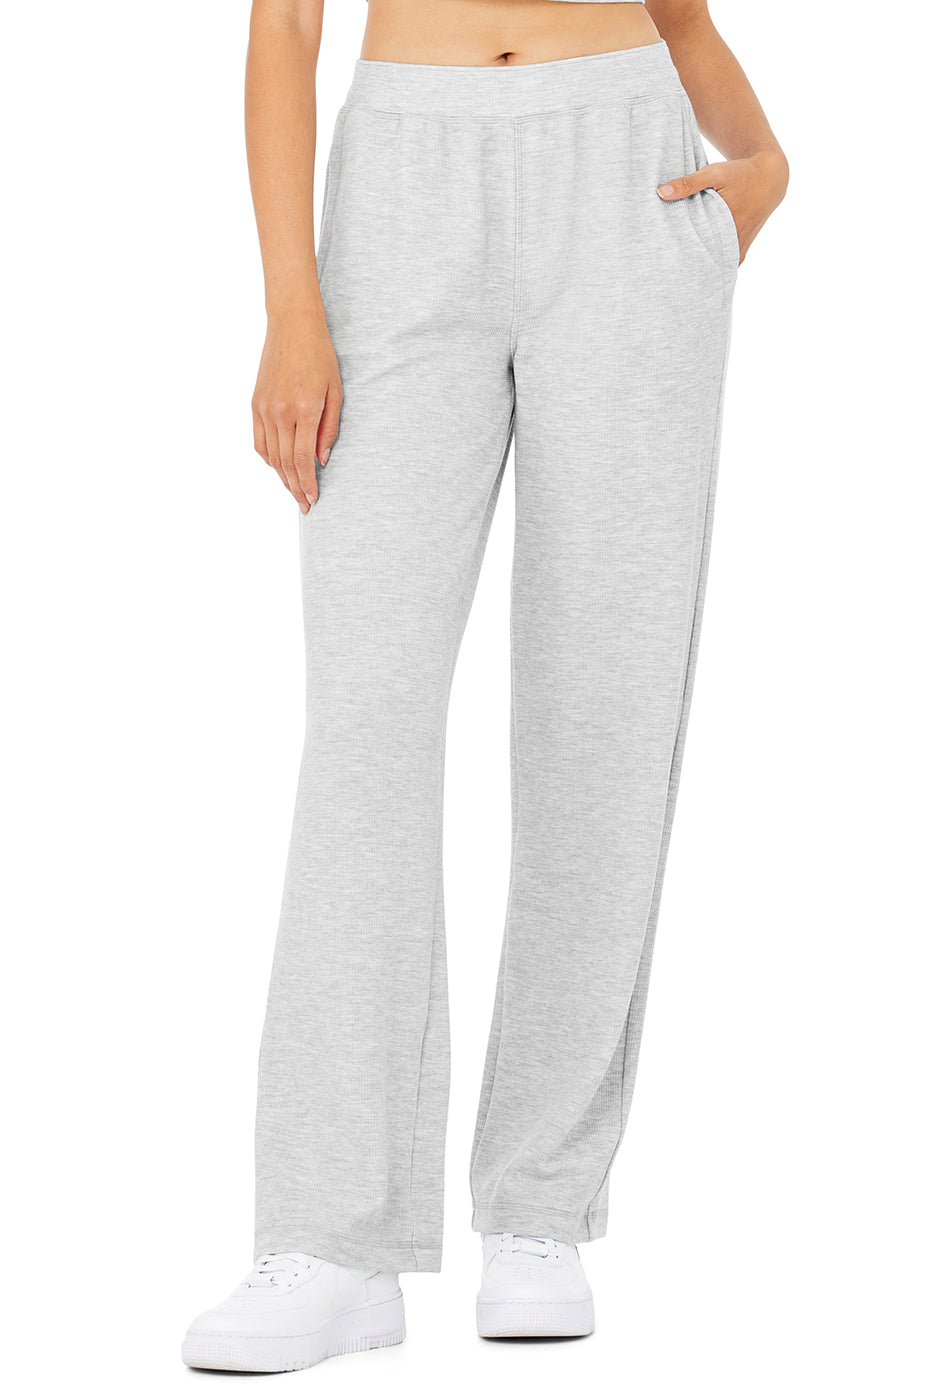 ALO Yoga, Pants & Jumpsuits, Micro Waffle Low Key Legging Nwot Xxs